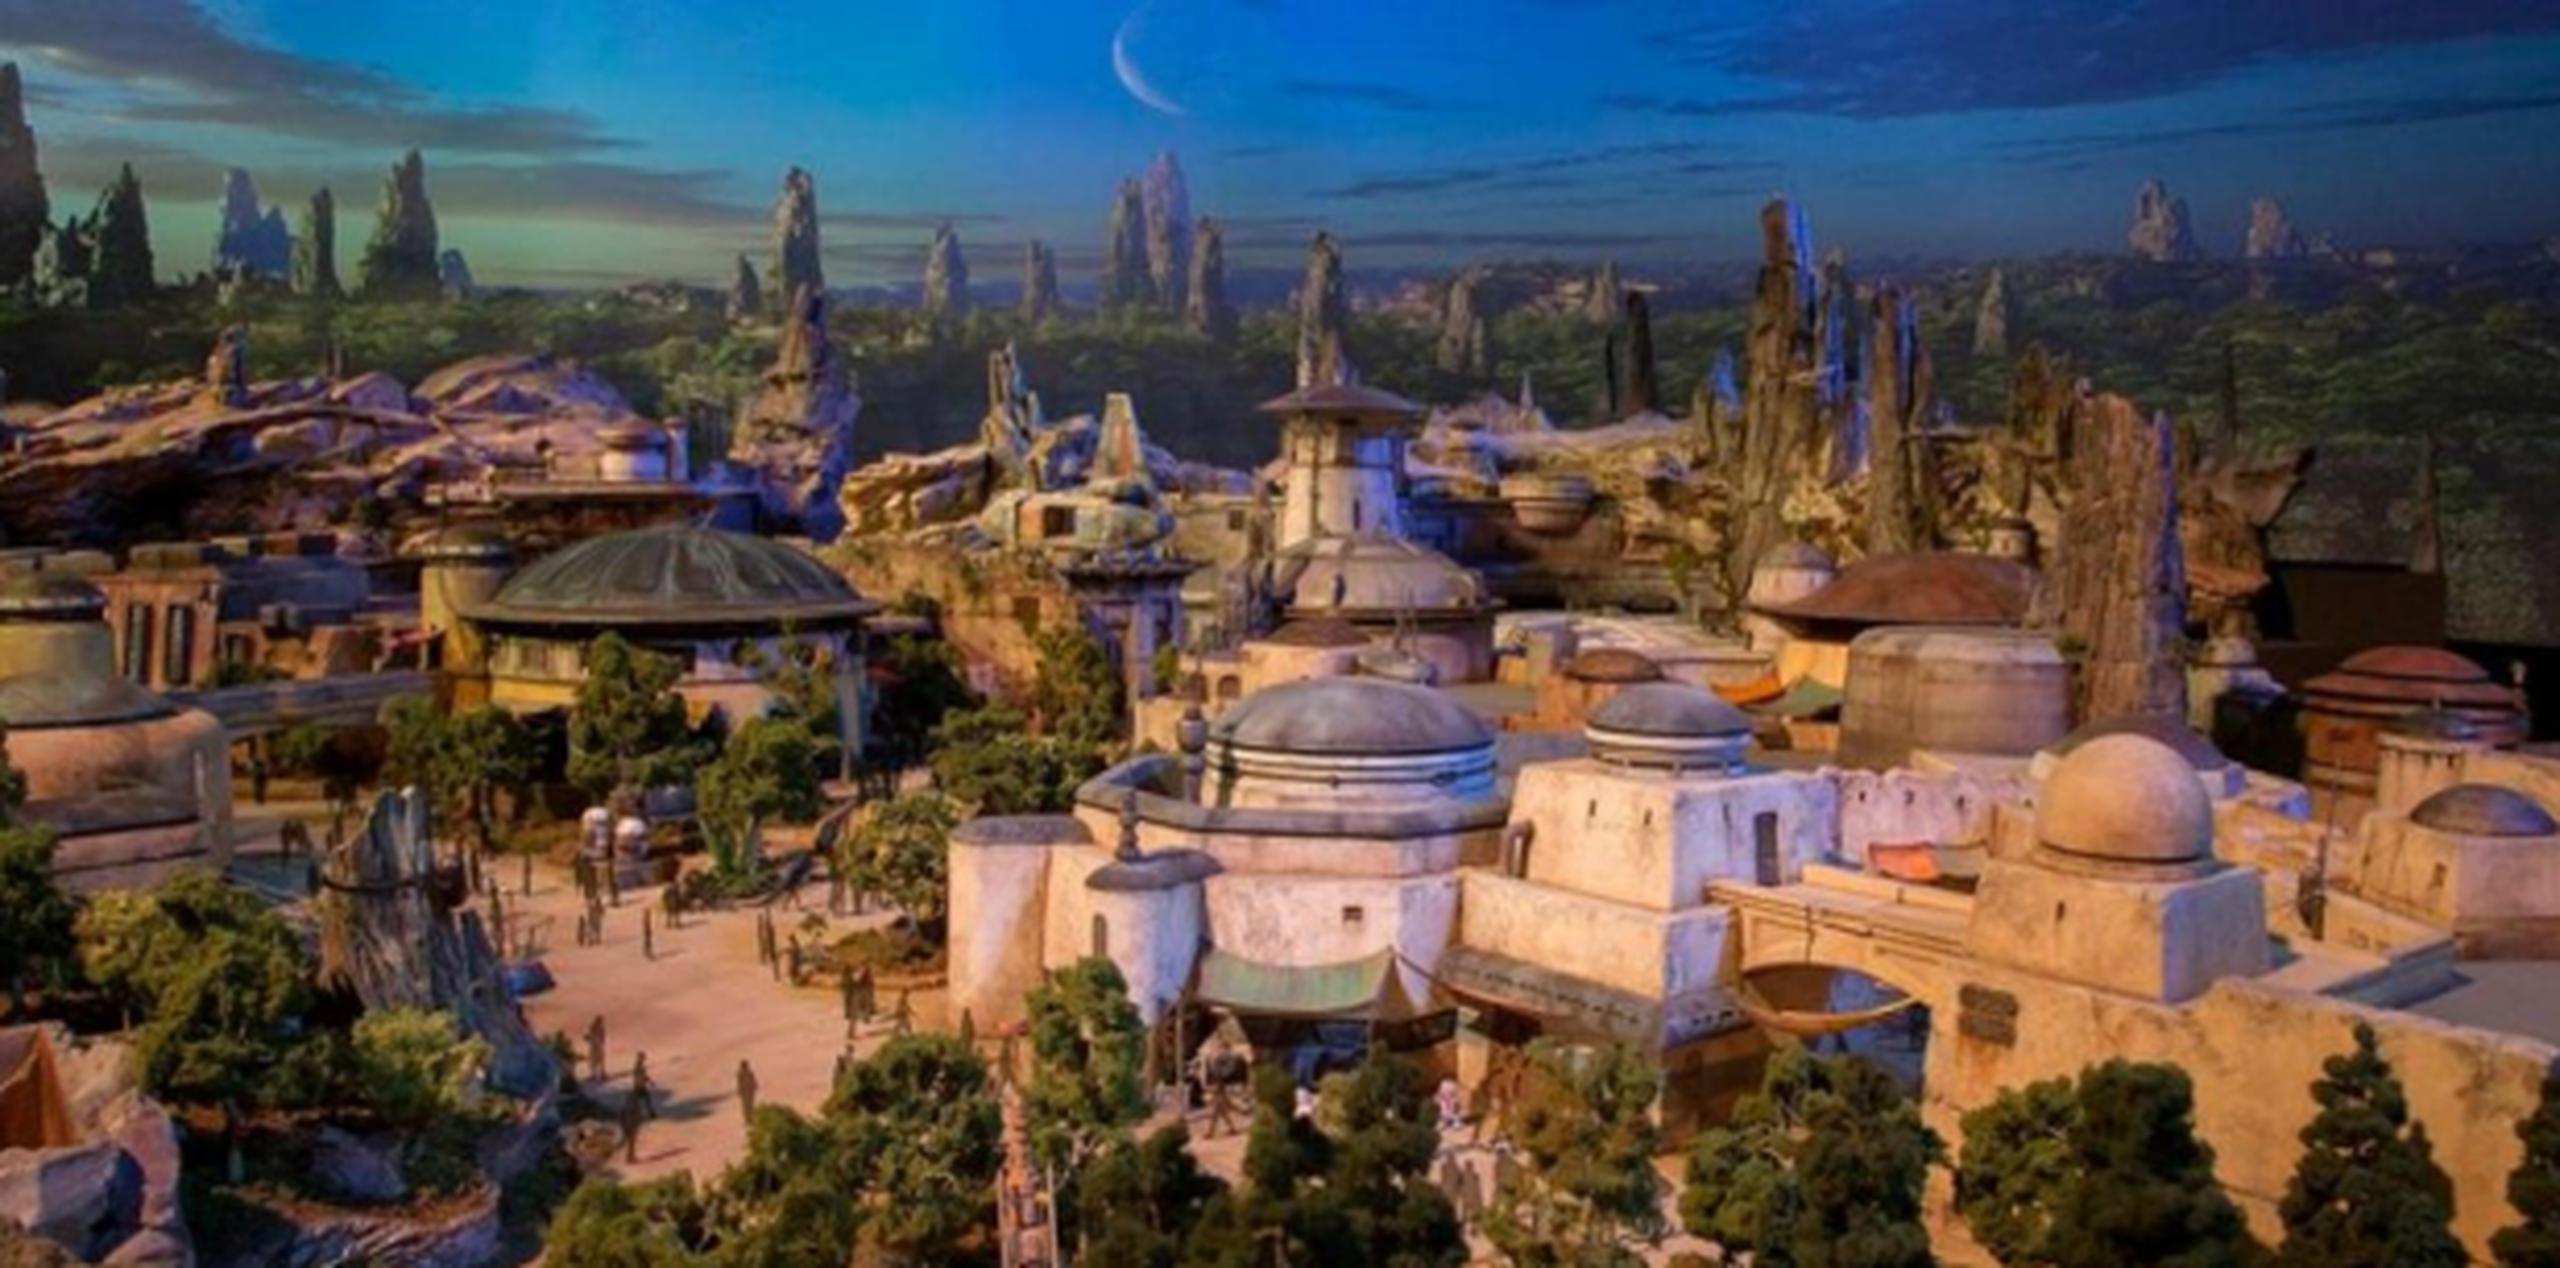 Star Wars Land. (Disney)